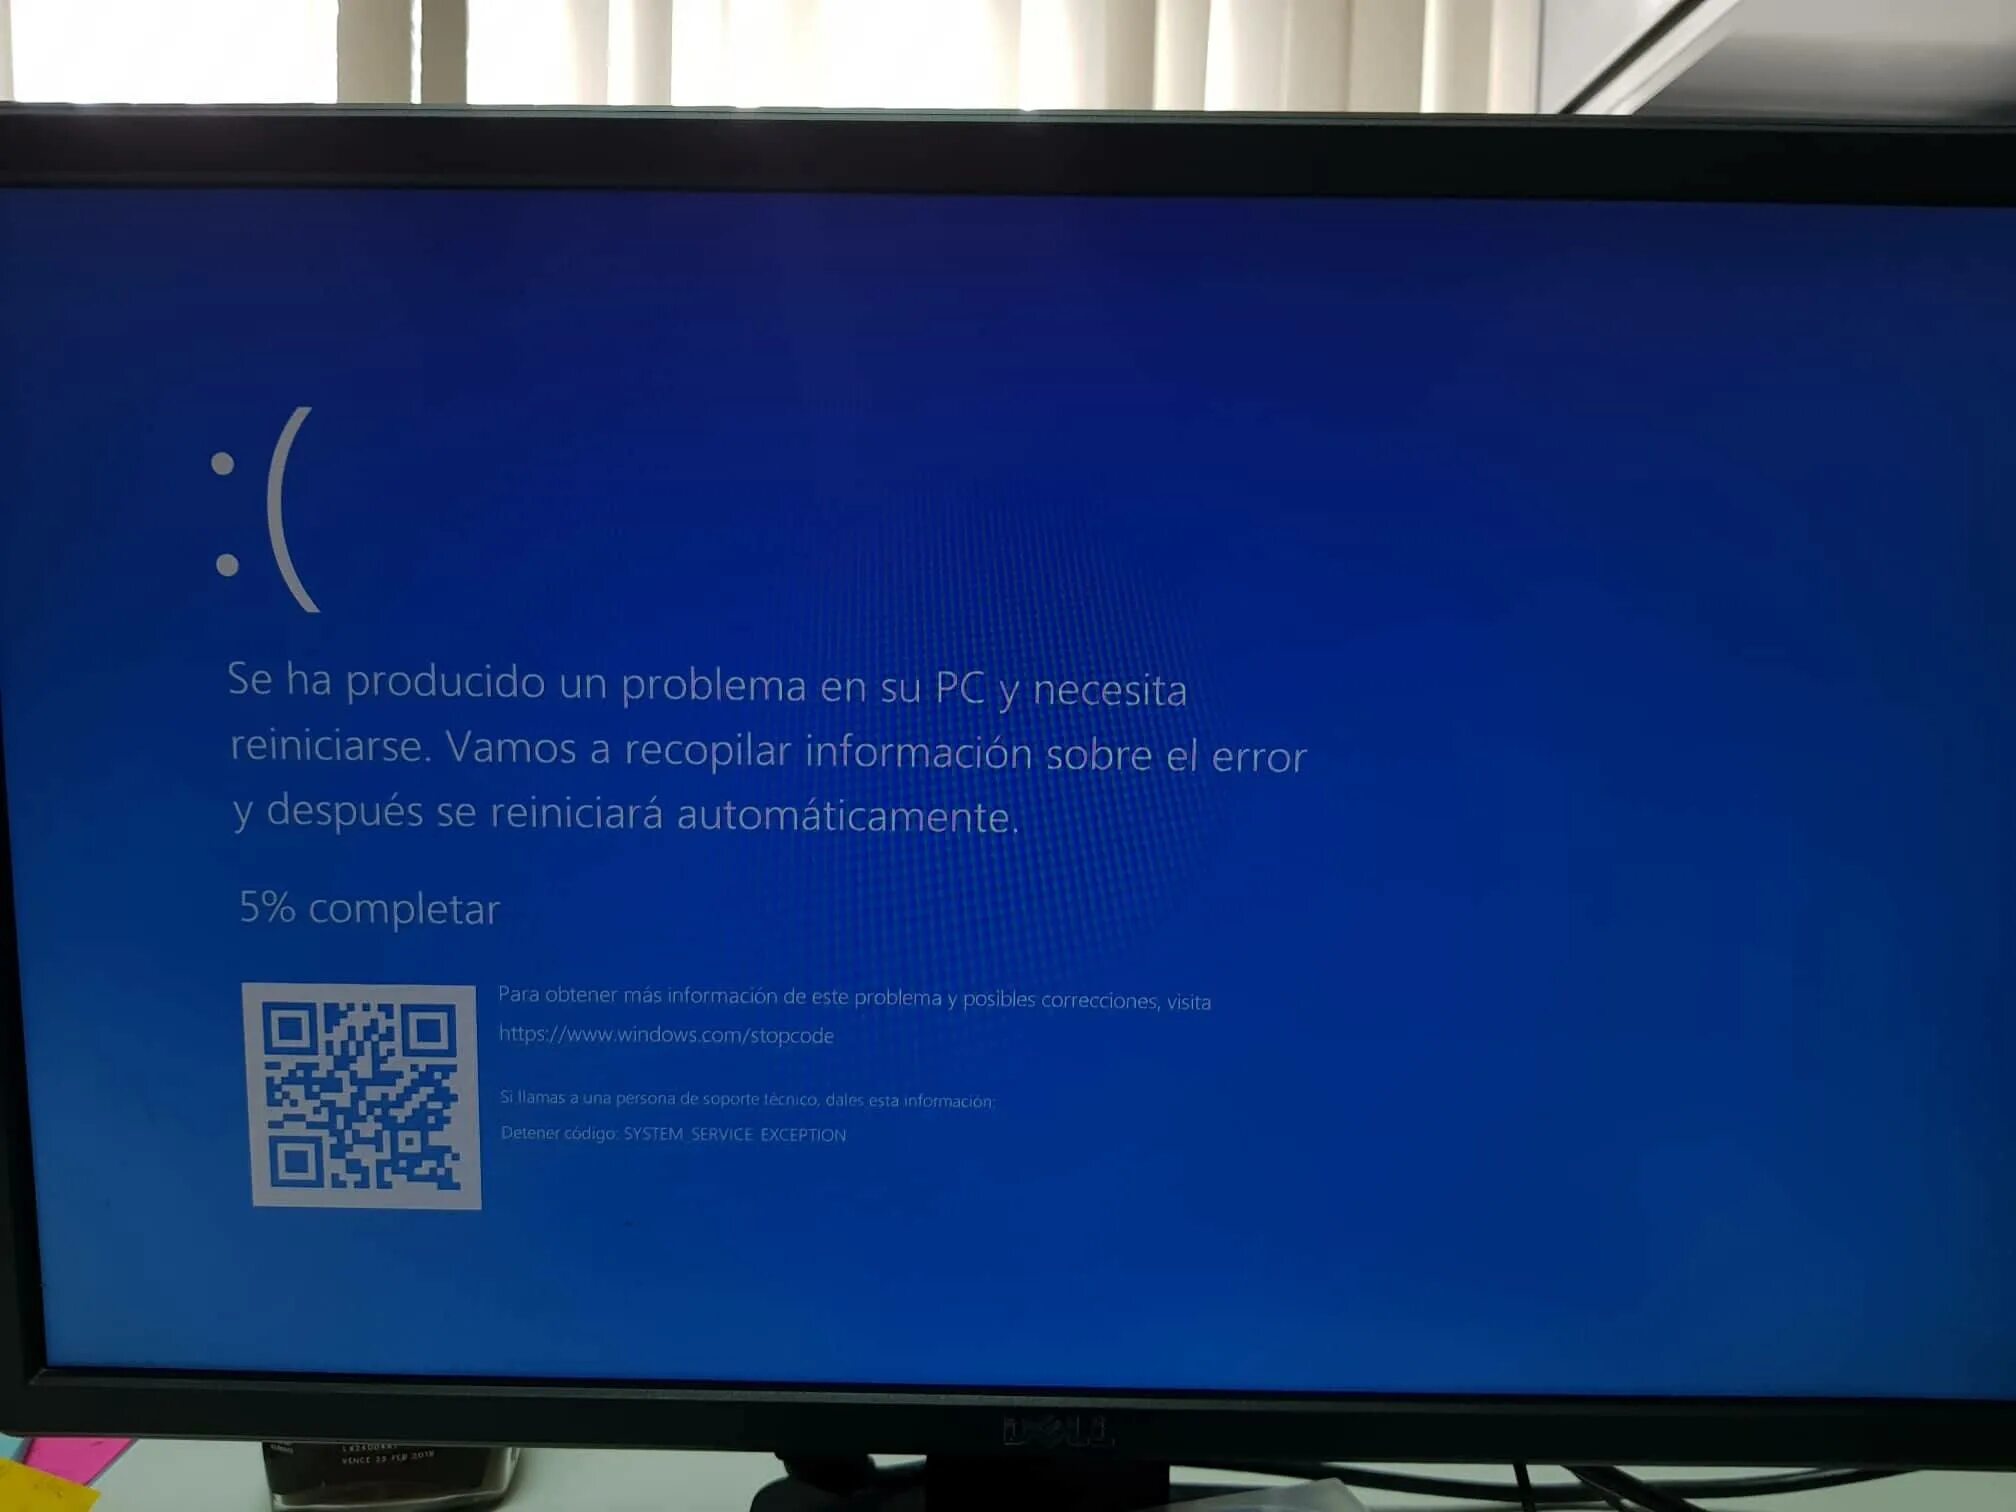 System failed exception. System service exception синий экран Windows 10. System exception ошибка. Код остановки System service exception. System service exception не включается.